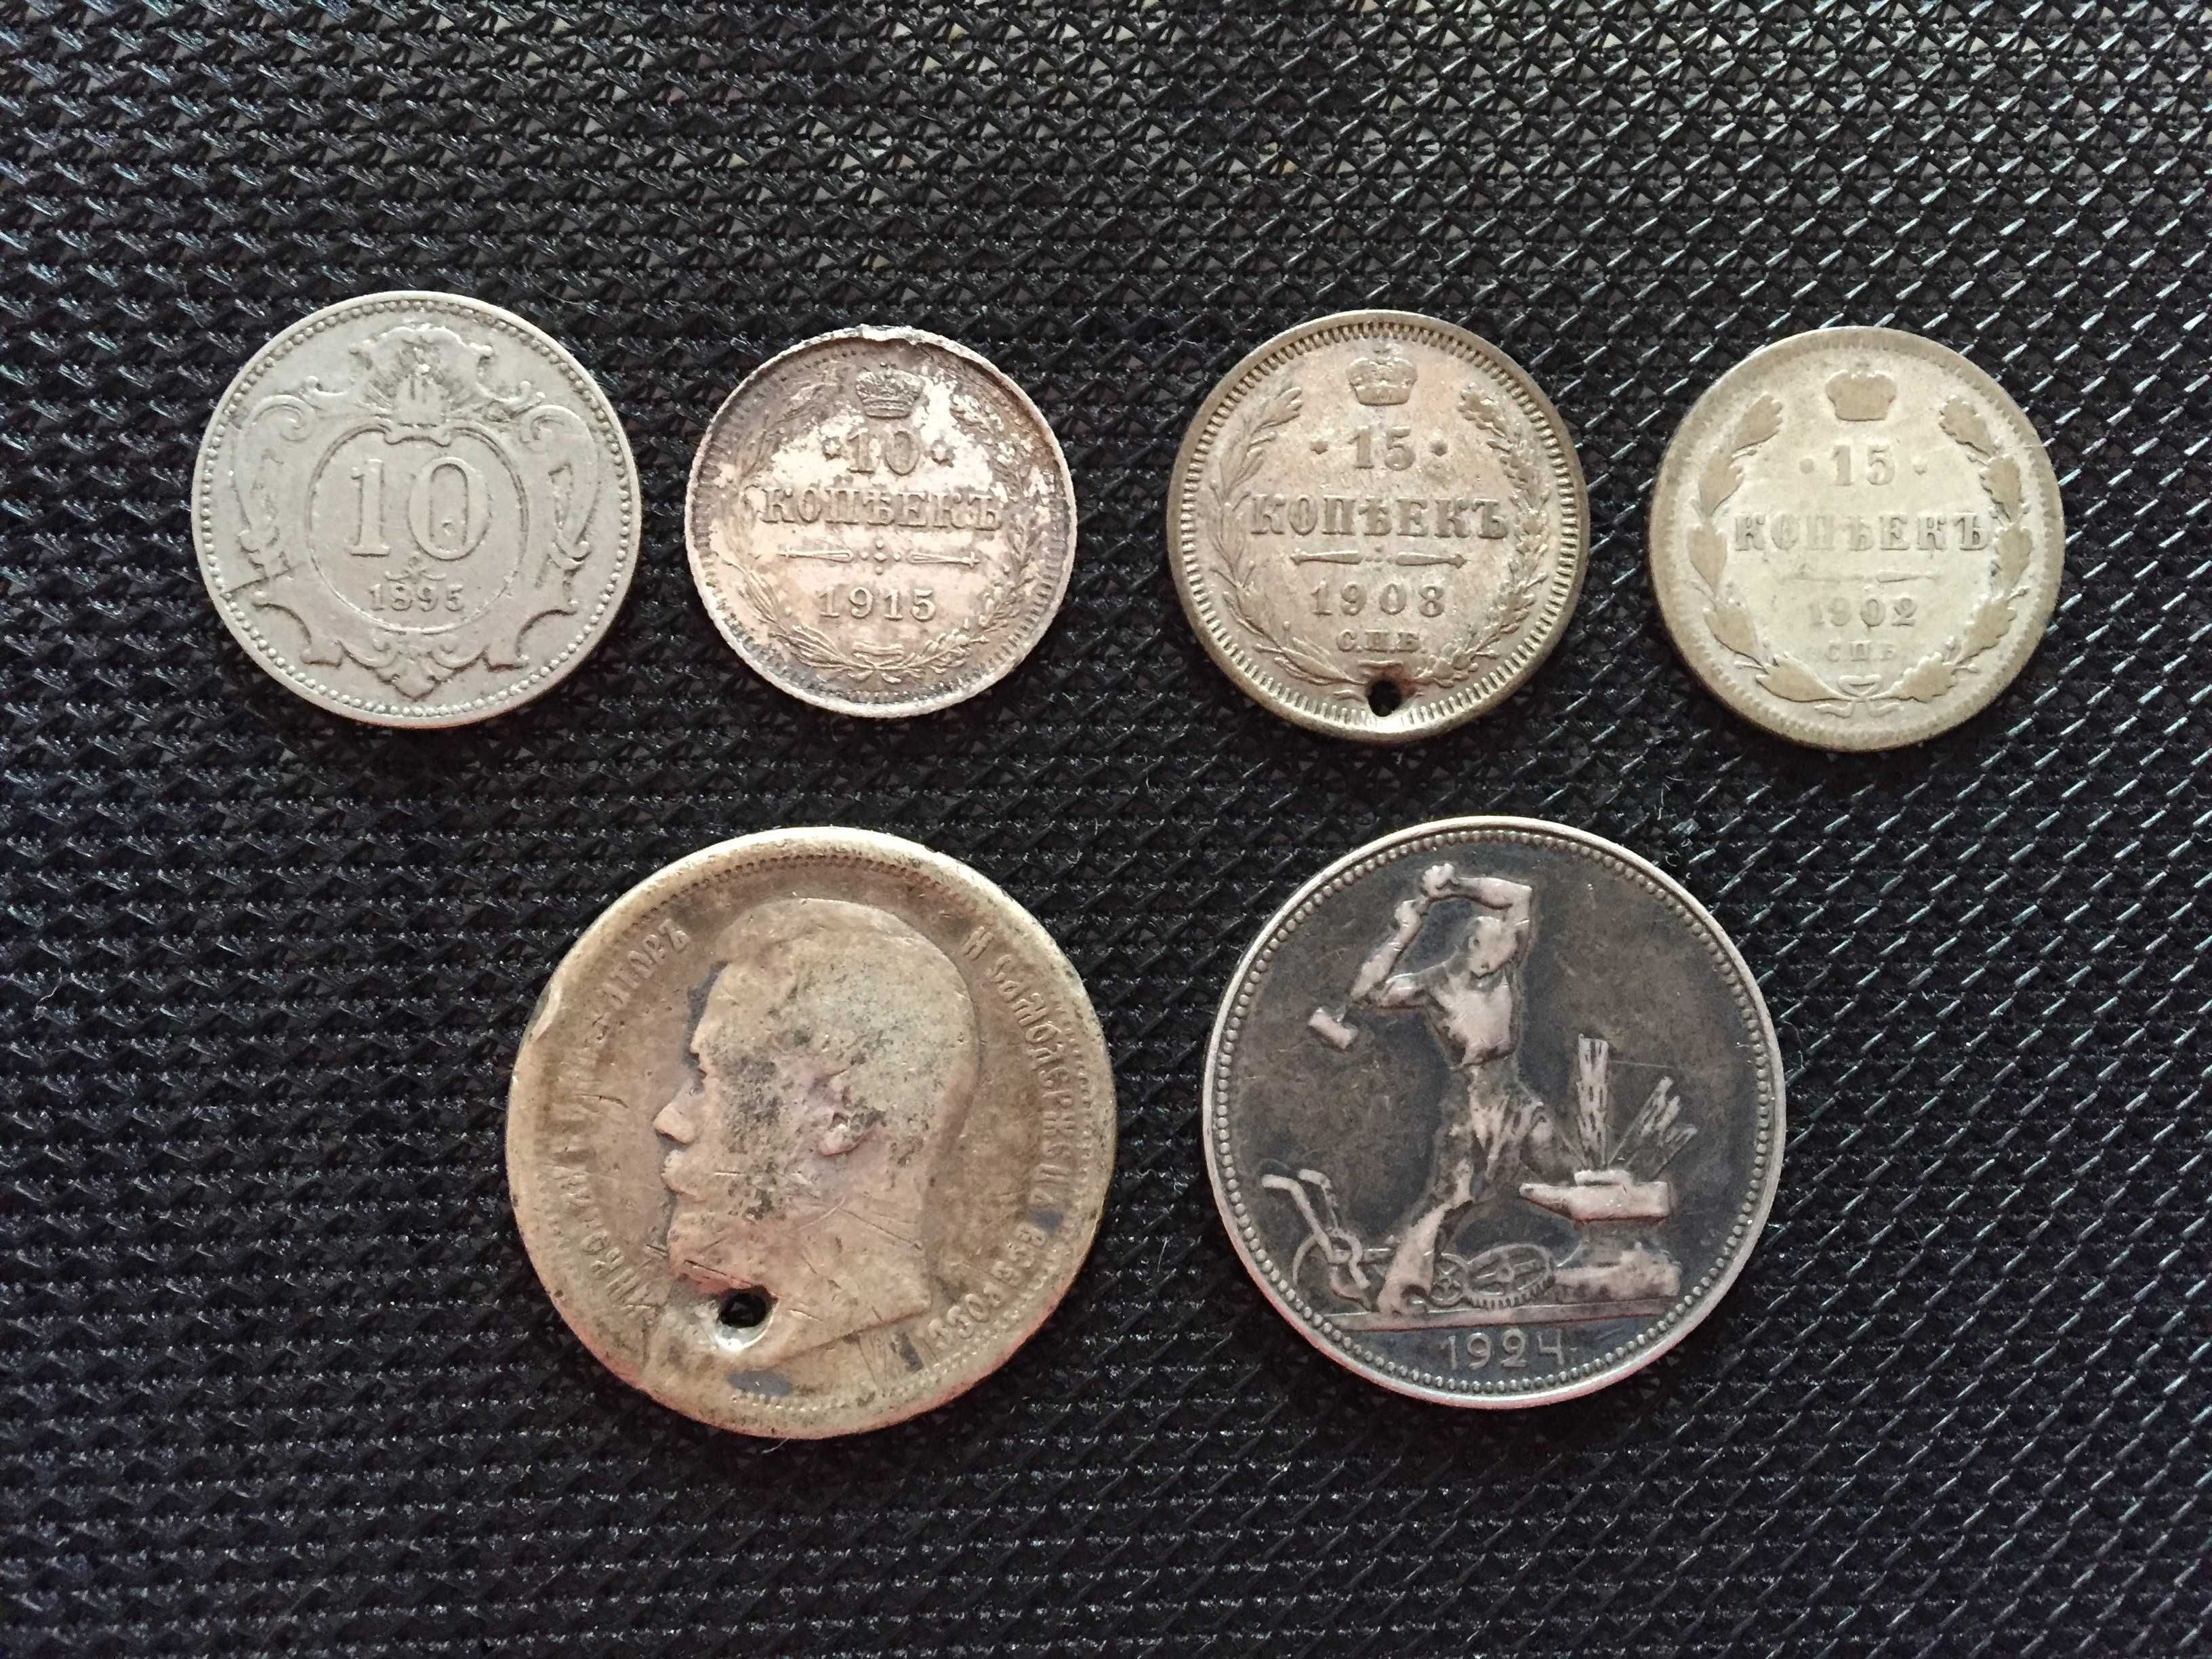 Лот серебряных монет конец 19го - начало 20го века.